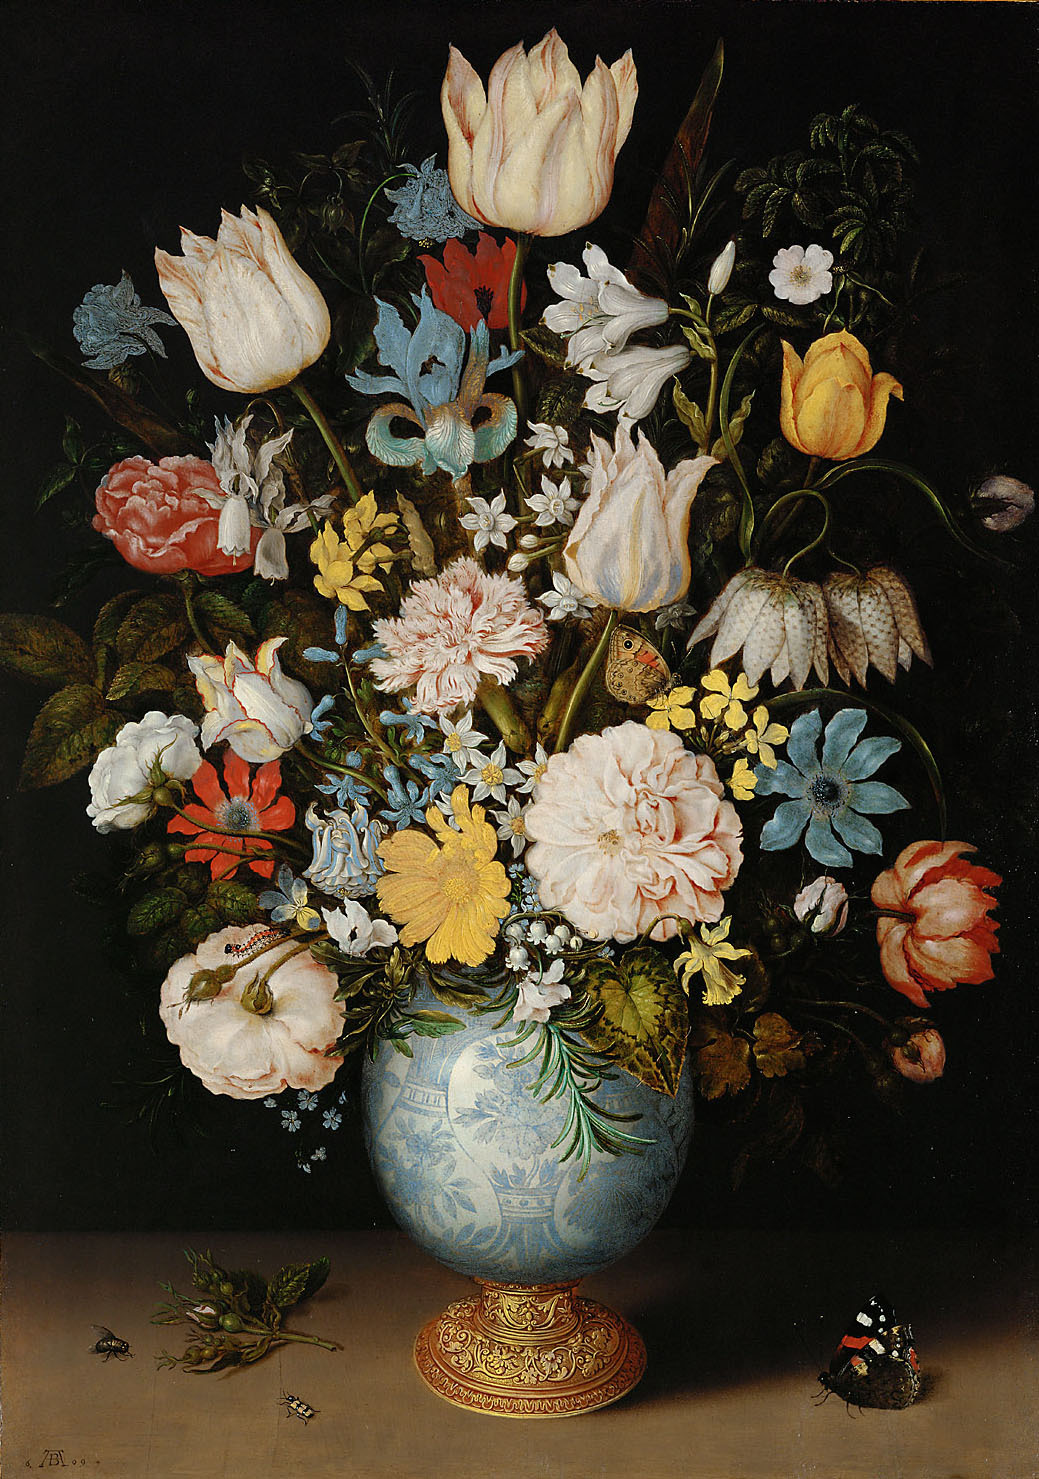 Ambrosius Bosschaert d. Ä. | Blumenstrauß | Displayed motifs: Vase, Rose, Flower, Coat of arms, White dove, Plant, 